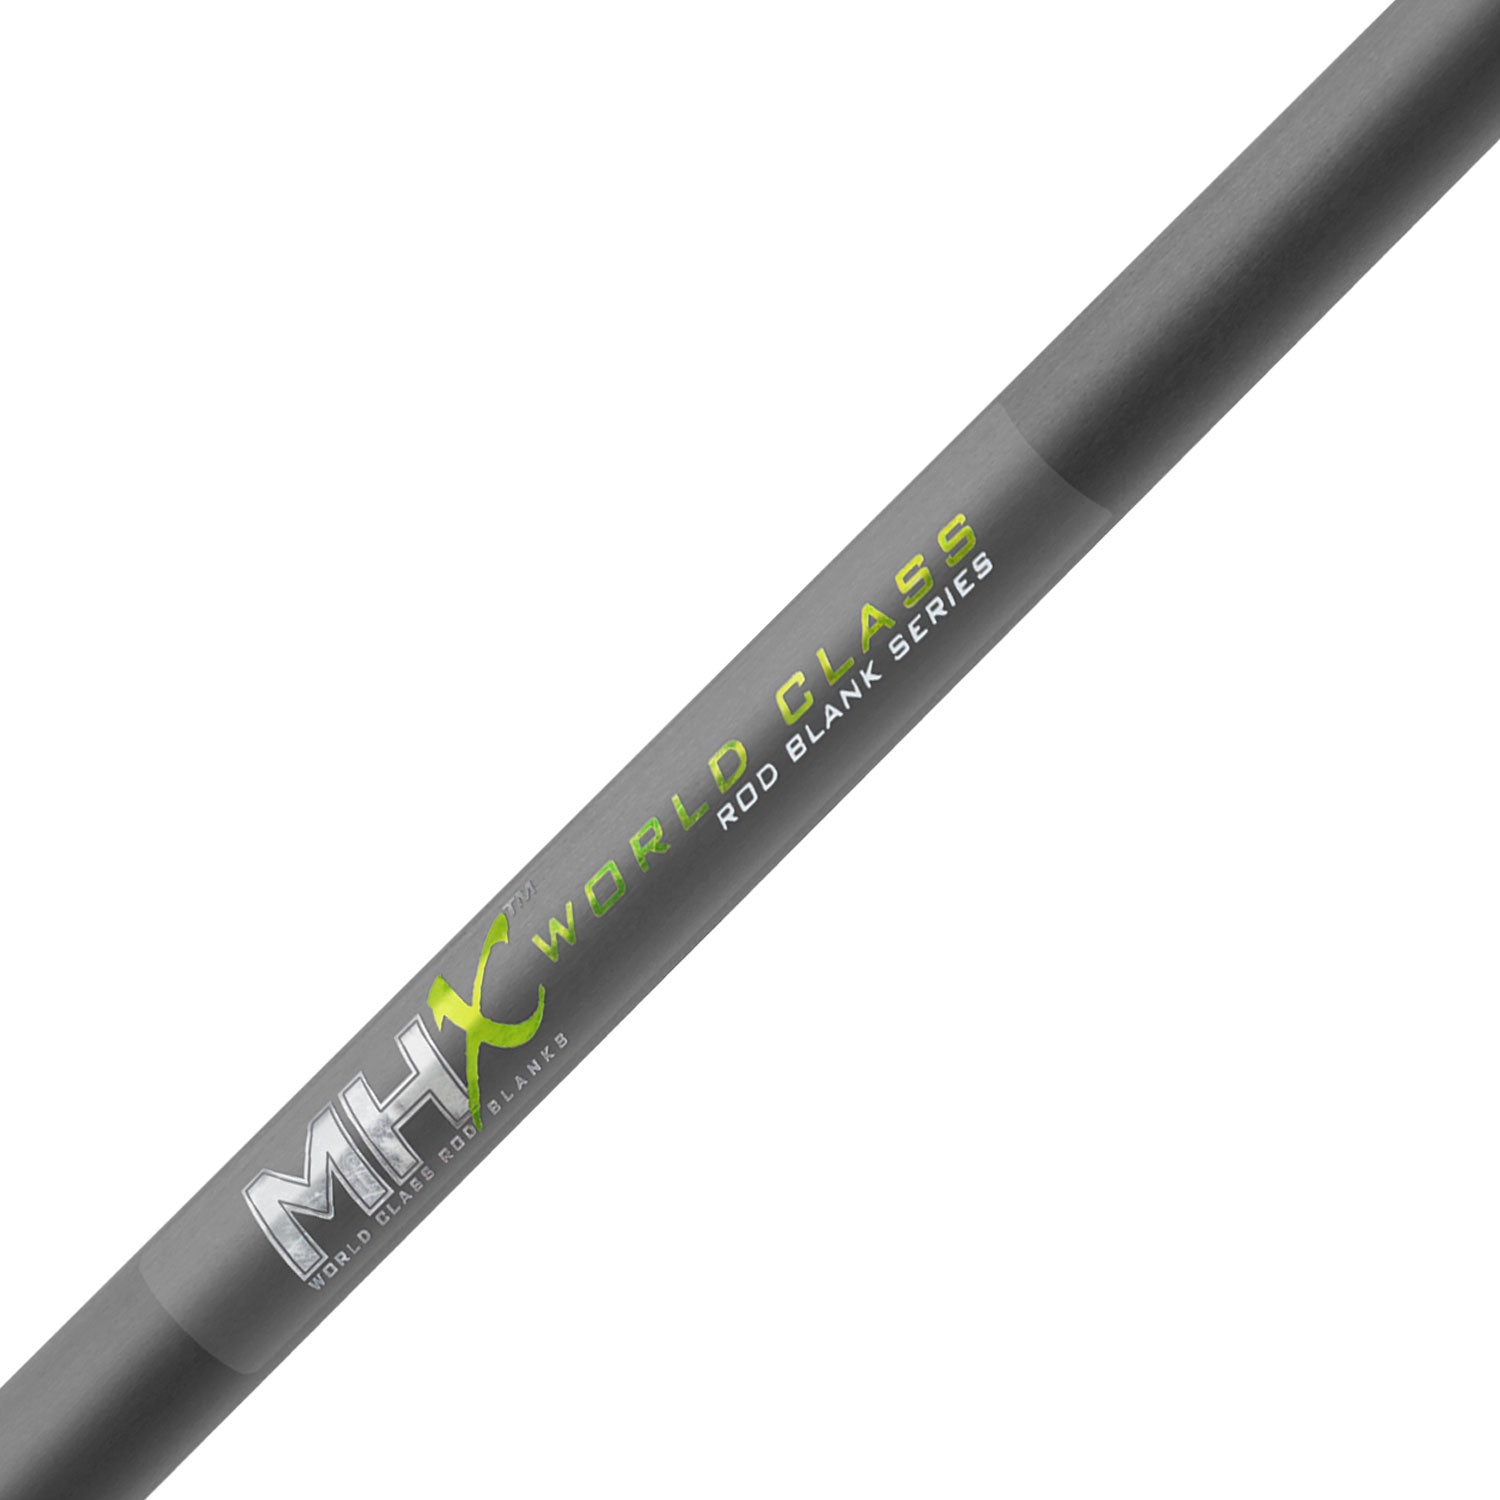 MHX 7'6" Med-Heavy Mag Taper Rod Blank - MB903-MHX